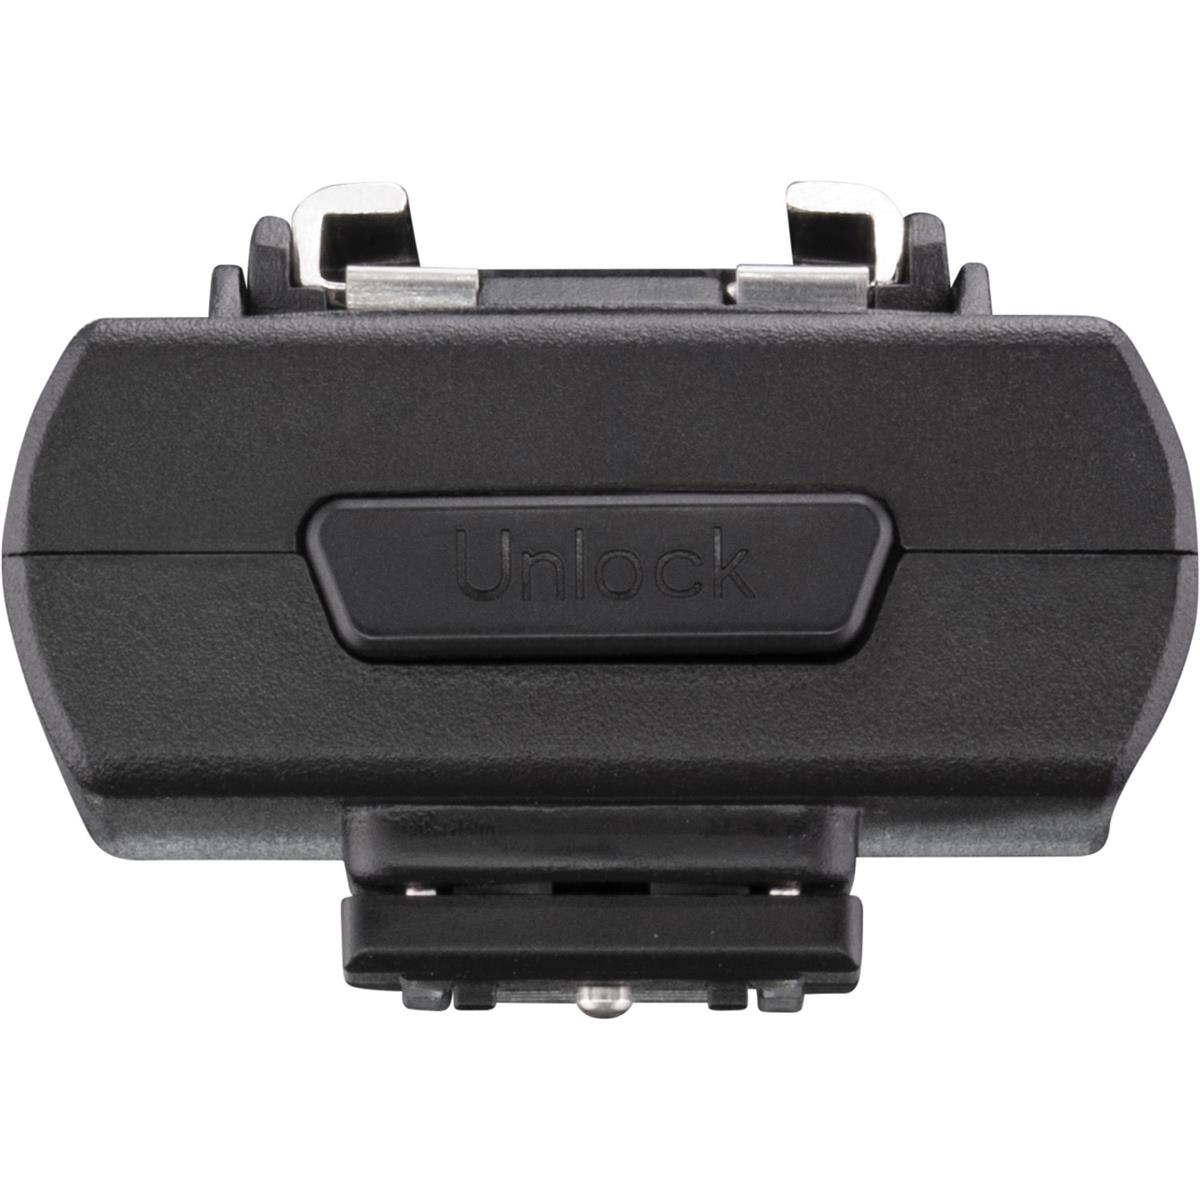 Westcott 4711 Sony Adapter for FJ-X2m Flash Trigger